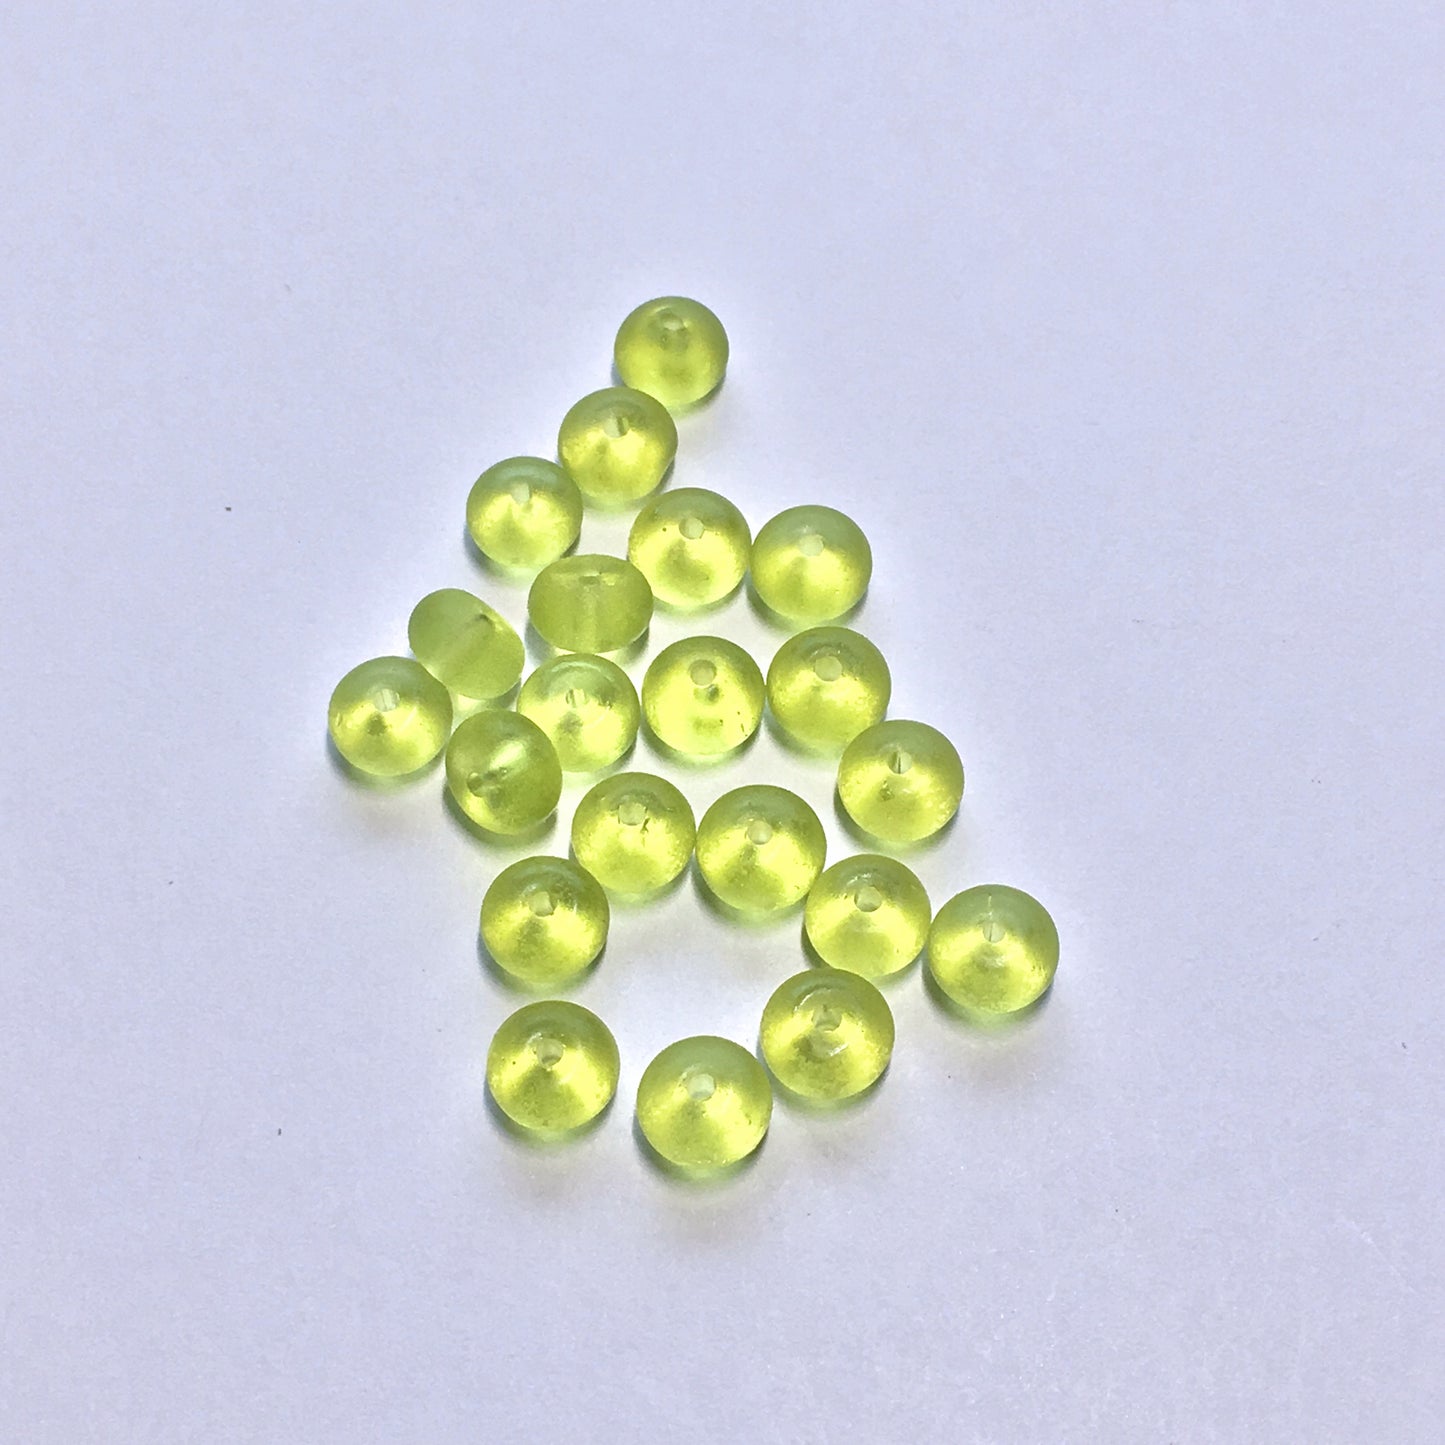 Translucent Matte Green Rondelle Beads, 3 x 6 mm, 21 Beads